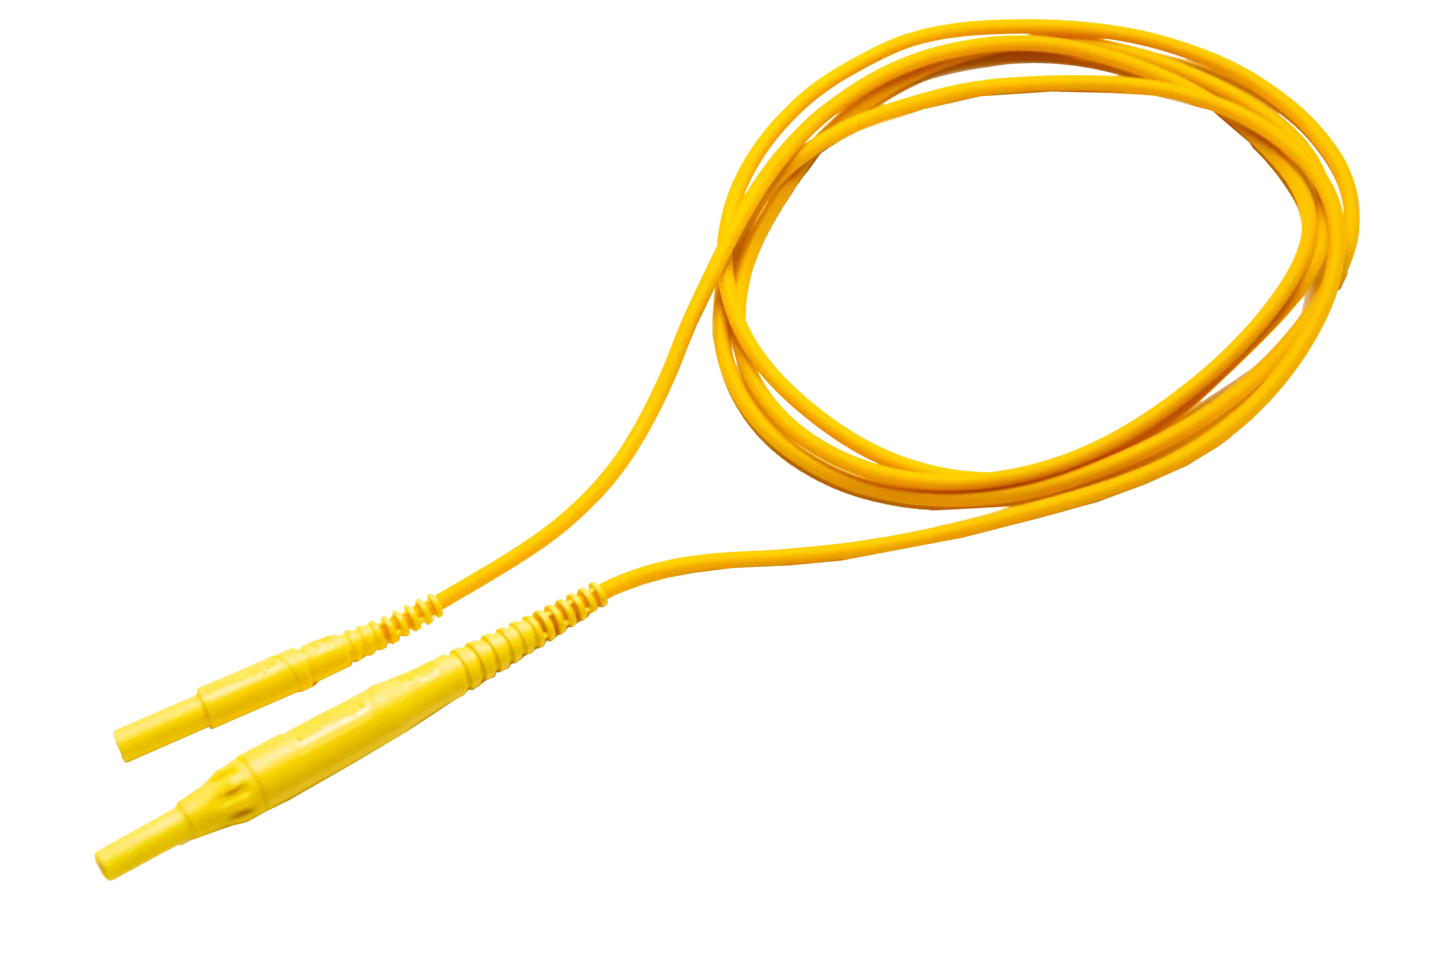 Test lead 2 m CAT IV 1000 V (banana plugs, fused 10 A) yellow